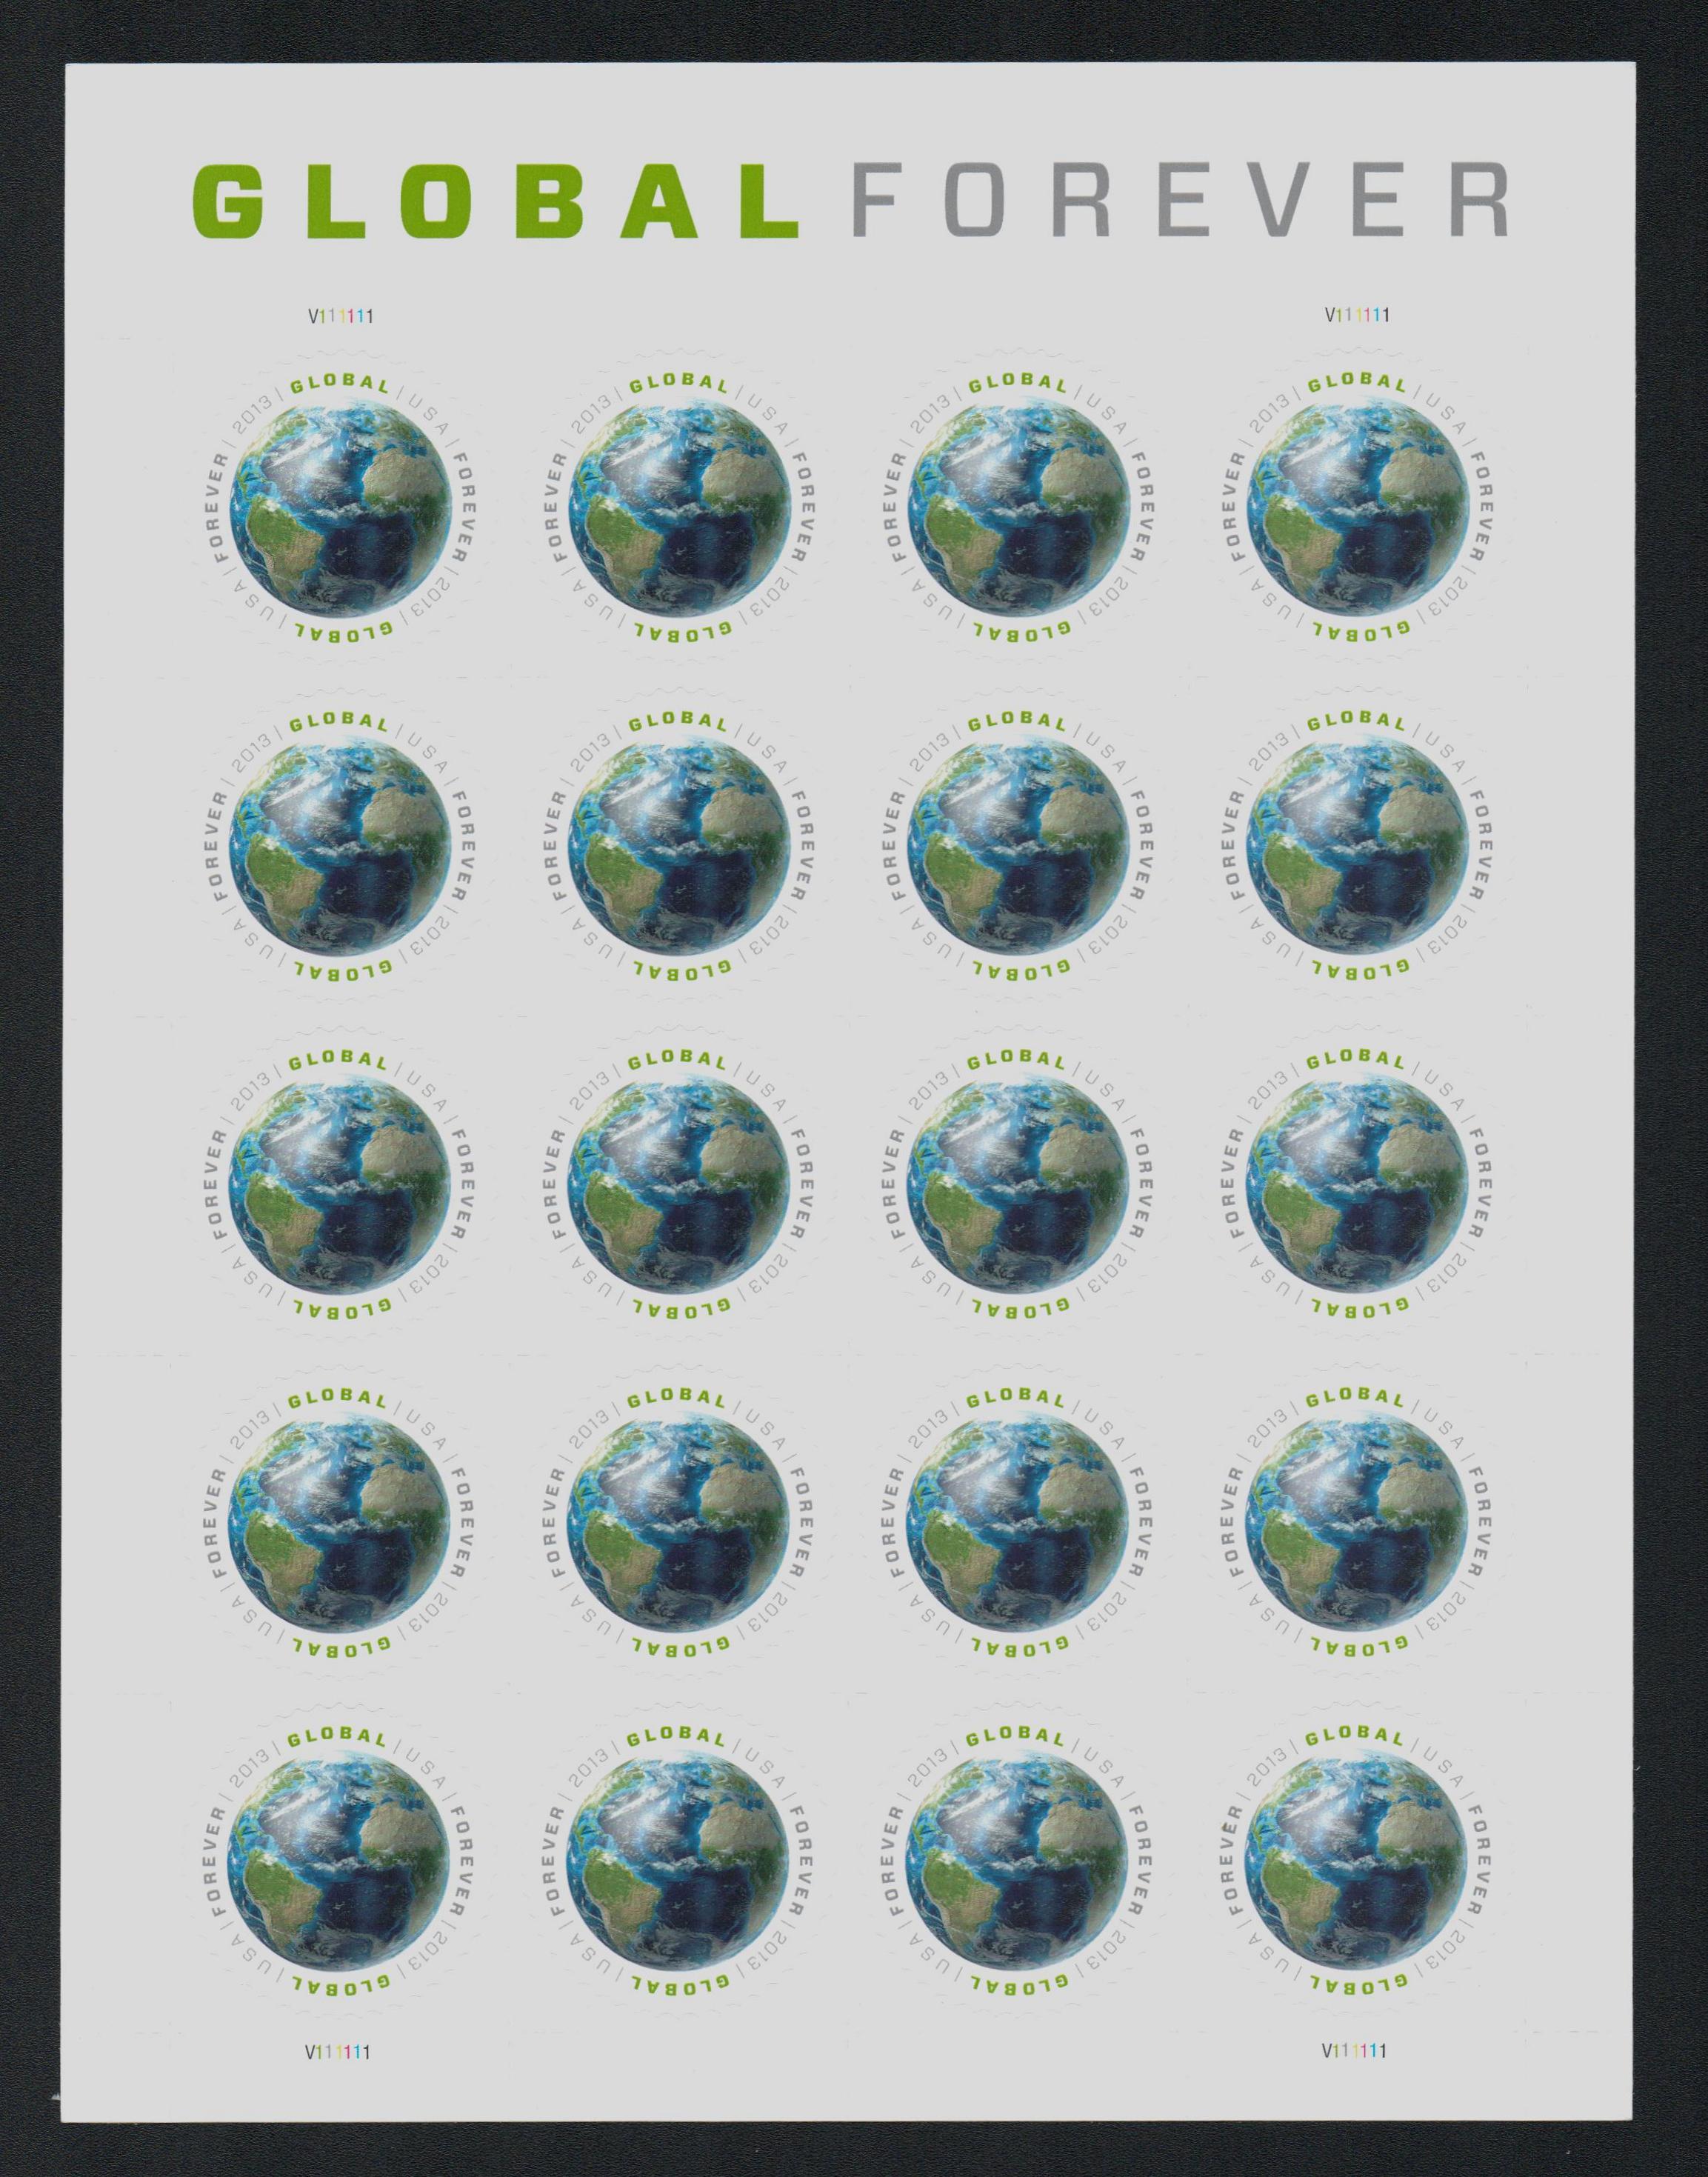 4740/5460 - 2013-20 Global Forever stamps, complete set of 8